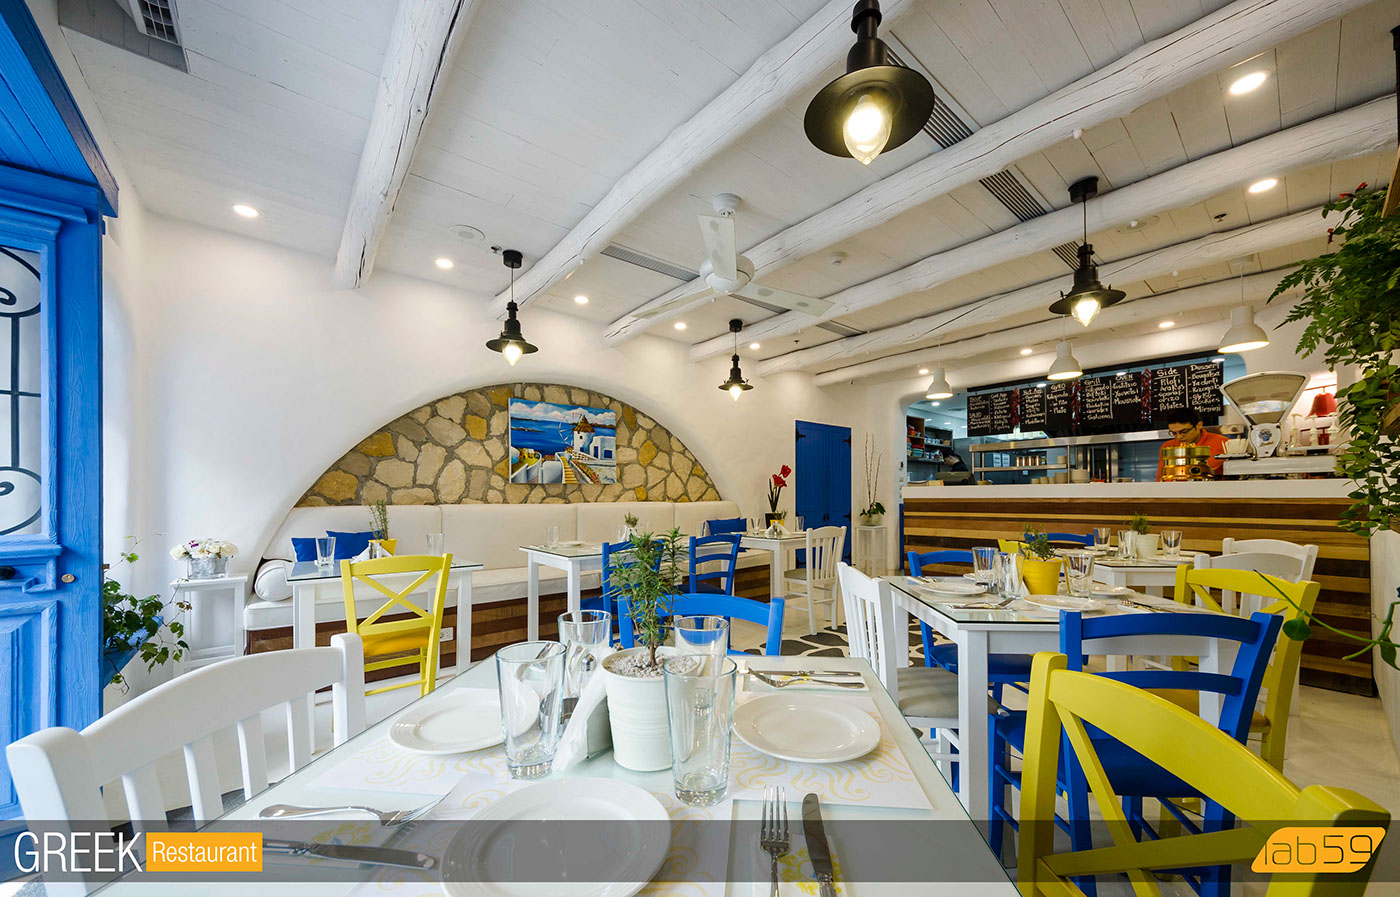 greek restaurant cafe blue egypt Greece cairo santorini